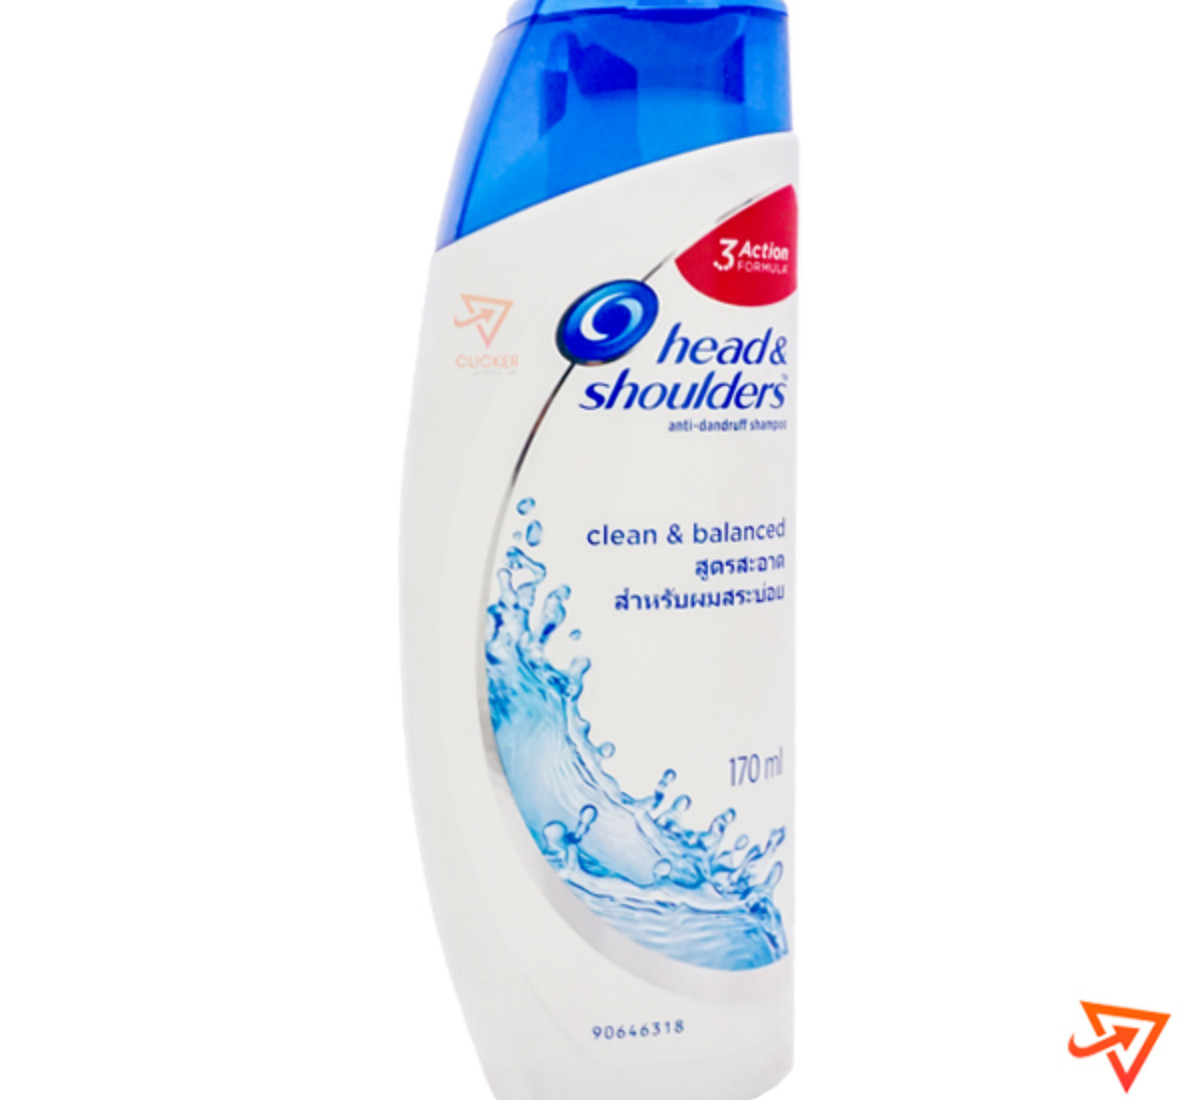 Clicker product 170ml HEAD&SHOULDER'S anti-dandruff shampoo-clean and balanced 1064